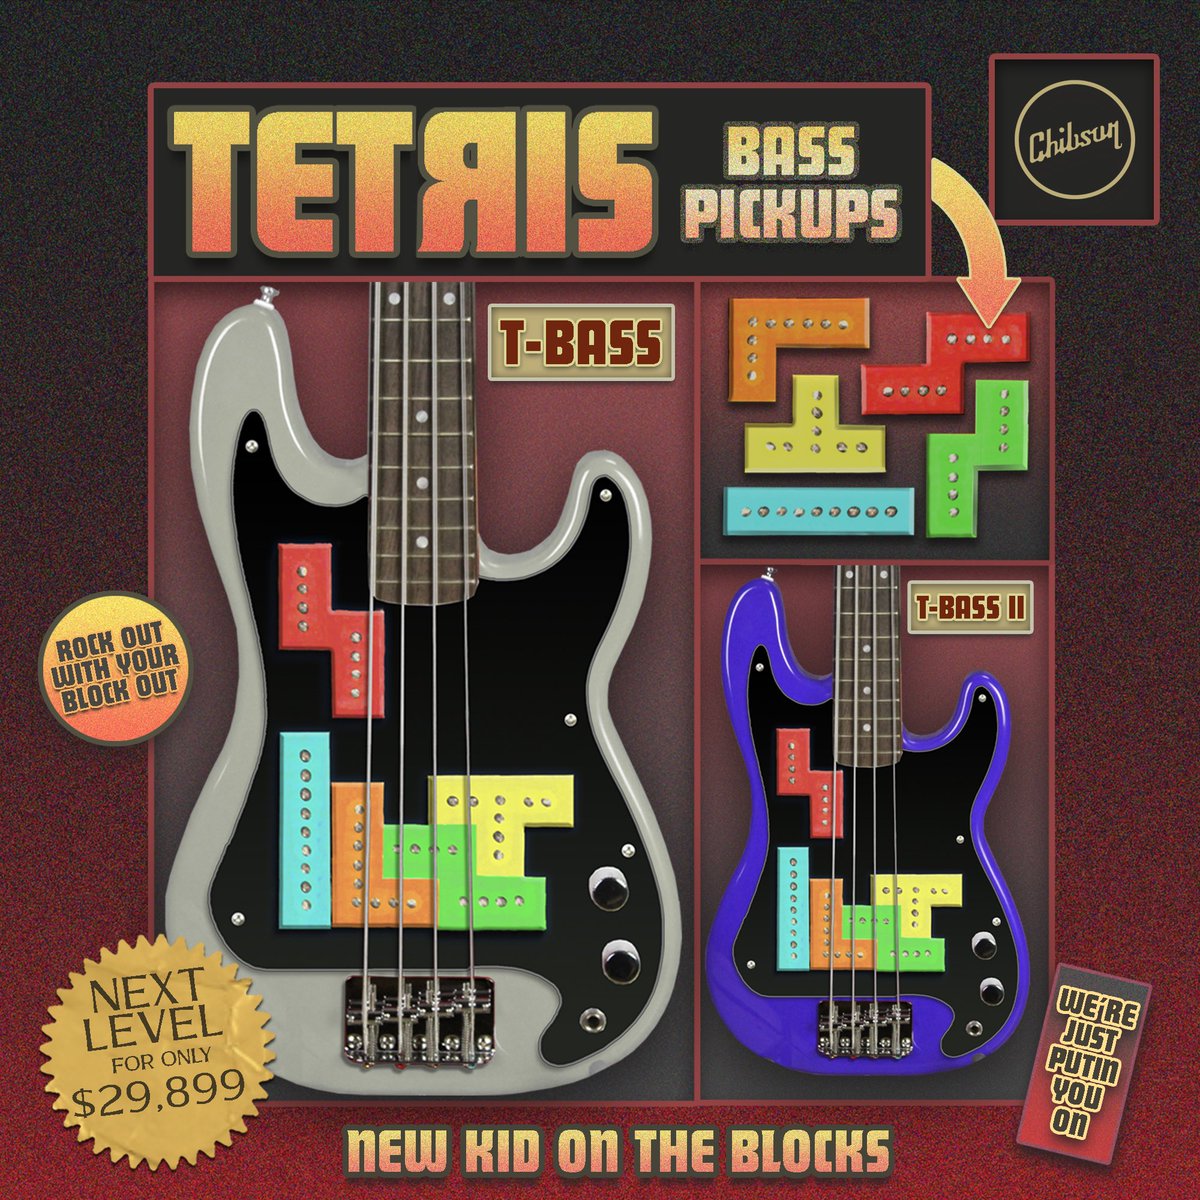 For Those About To Block

#chibson #chib #chibs #chibi #blocks #blocker #blocking #tetris #game #gear #guitarist #bass #bassplayer #basspickup #pbass #onlyachibsonisgoodenough